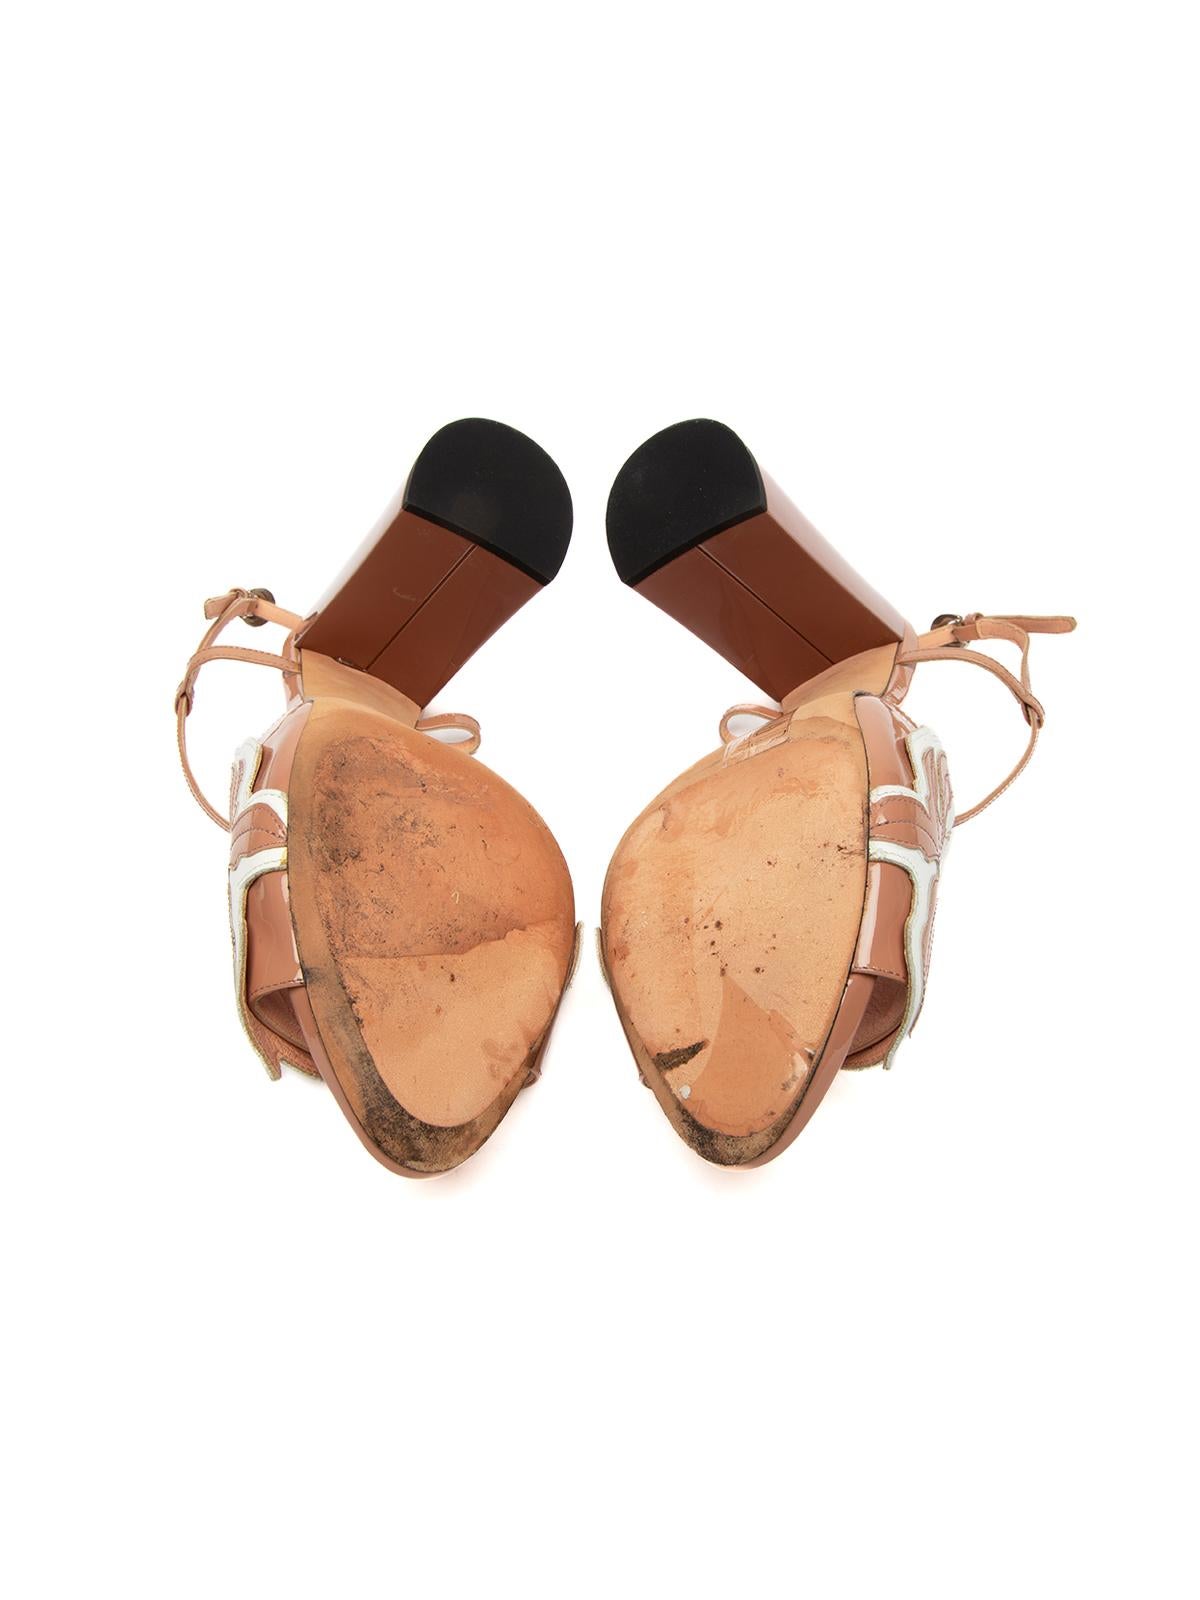 Pre-Loved Rochas Women's Patent Leather Block Heels Shoes 1